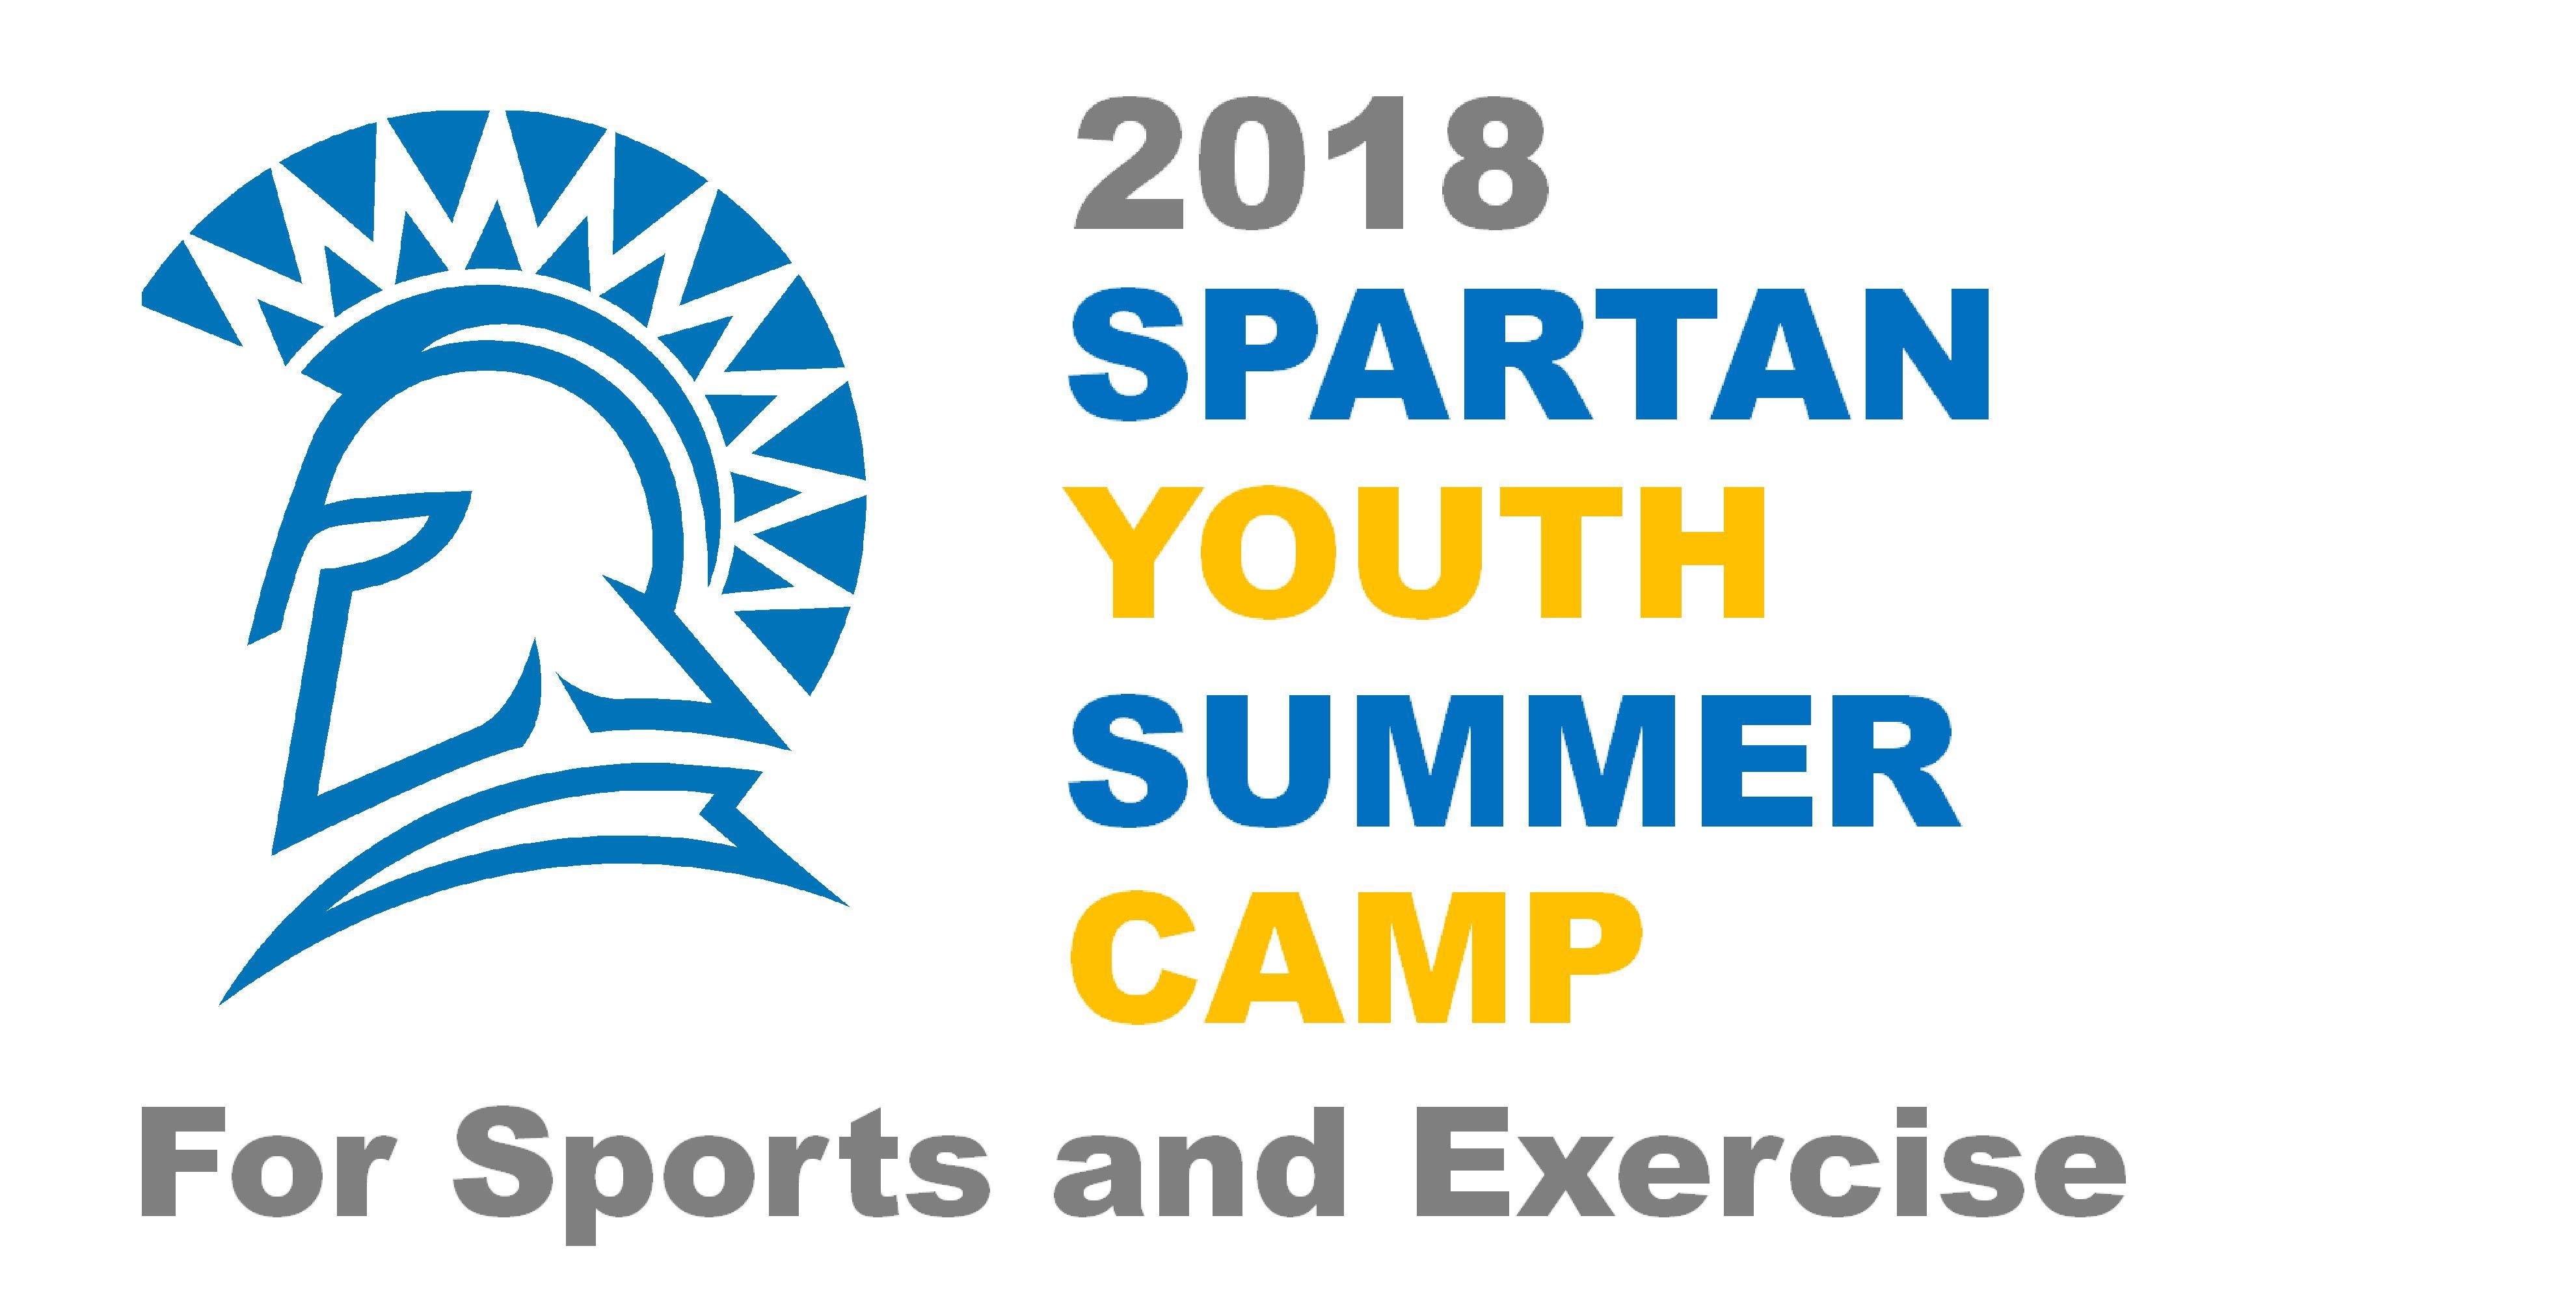 Fun Camp Logo - Spartan Youth Summer Camp | Department of Kinesiology | San Jose ...